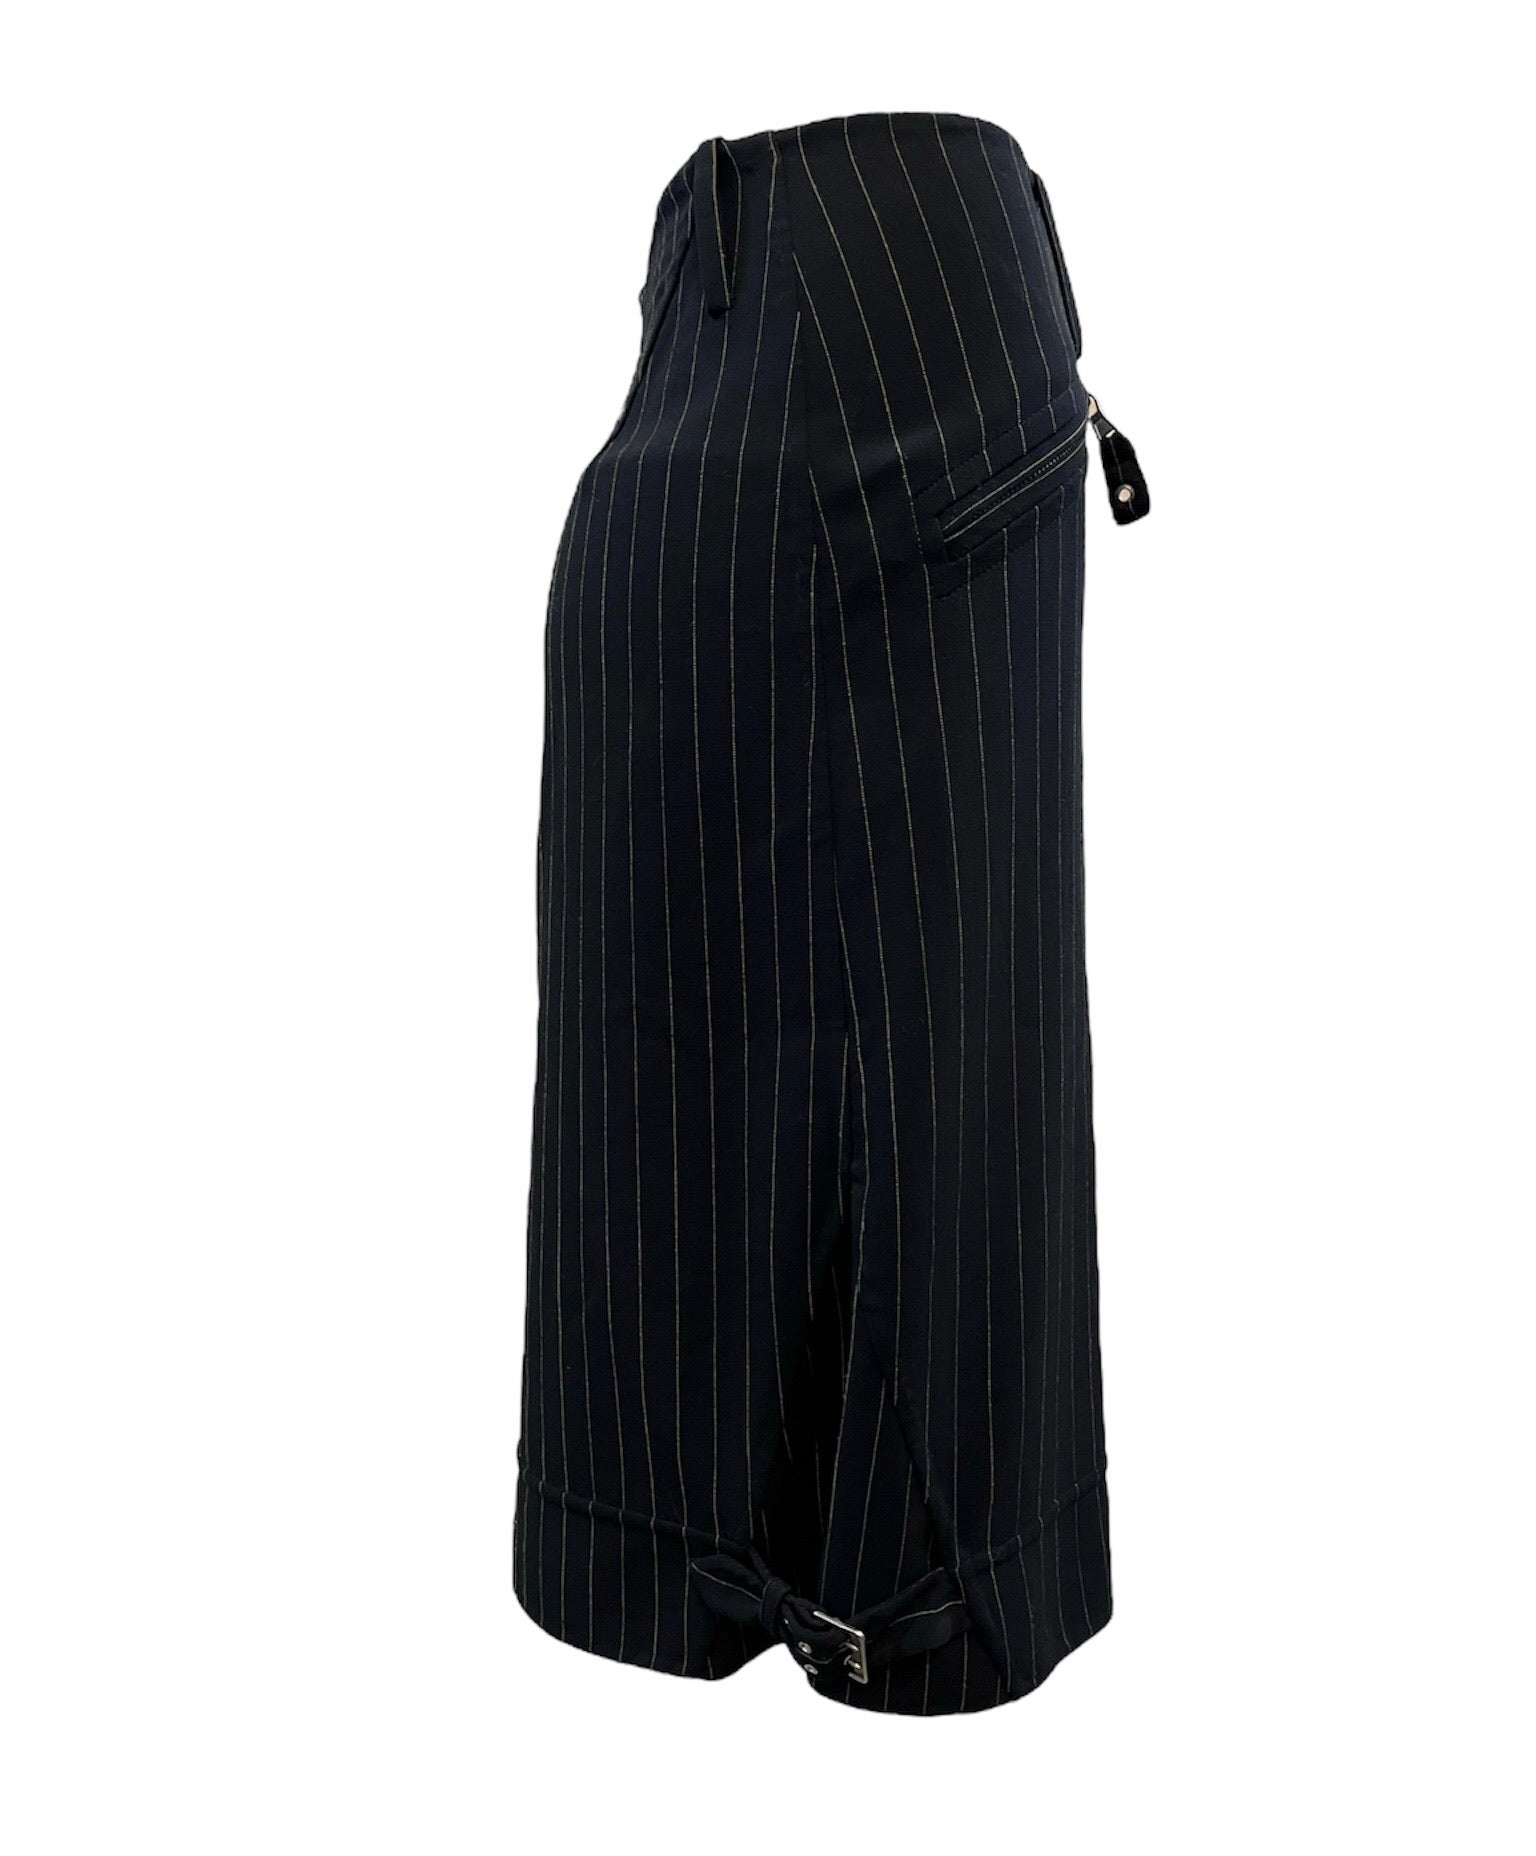  Jean Paul Gaultier 90s Black Pinstripe Skirt with Buckles SIDE 2 of 5